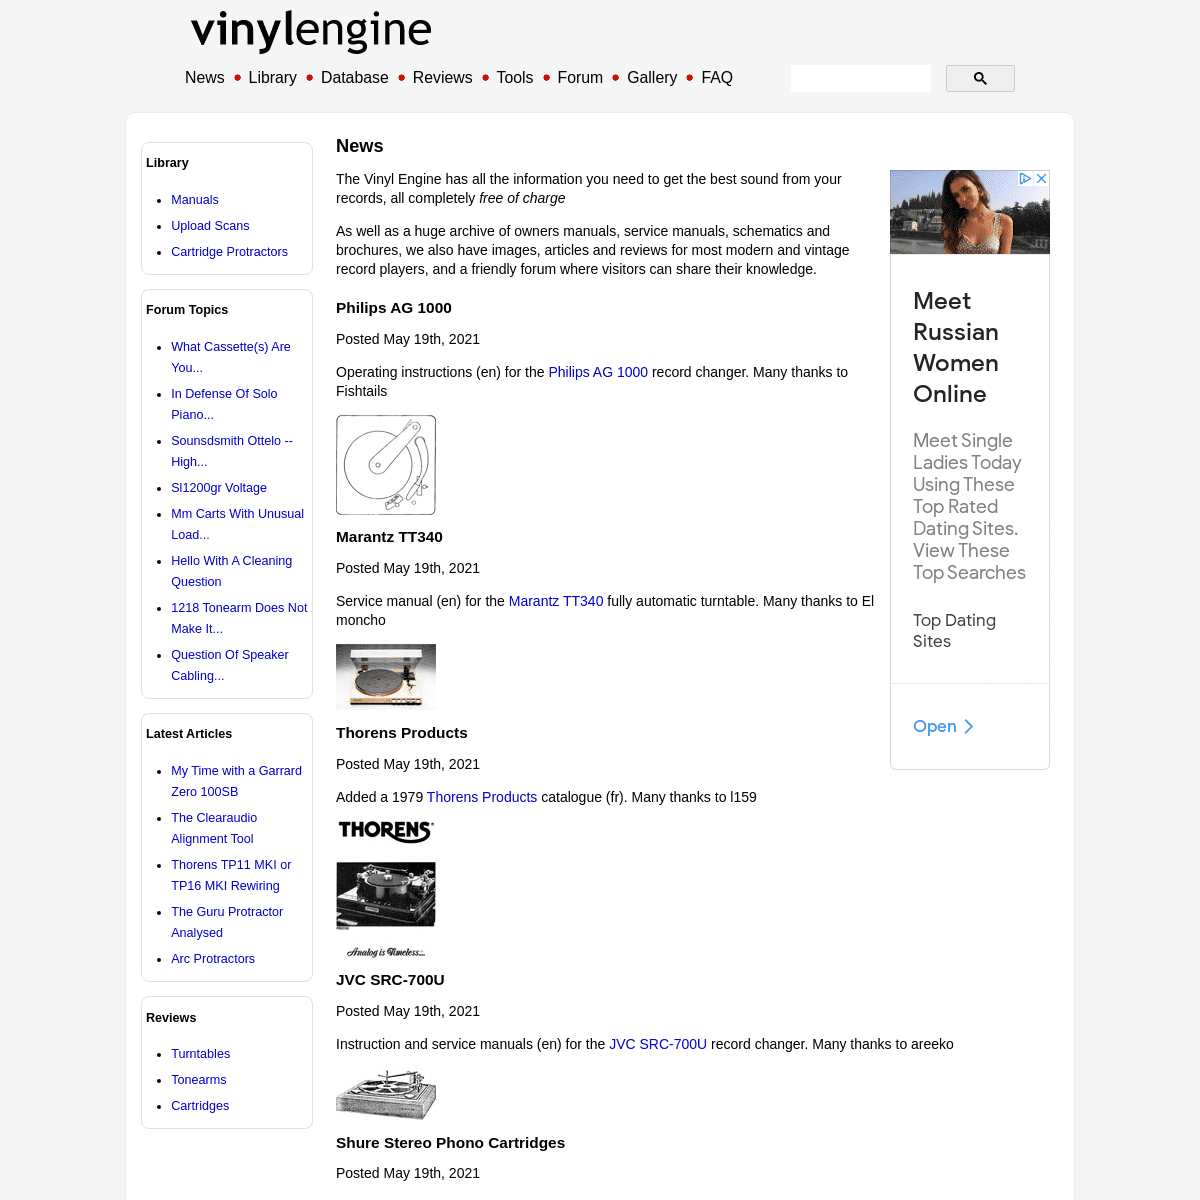 A complete backup of https://vinylengine.com